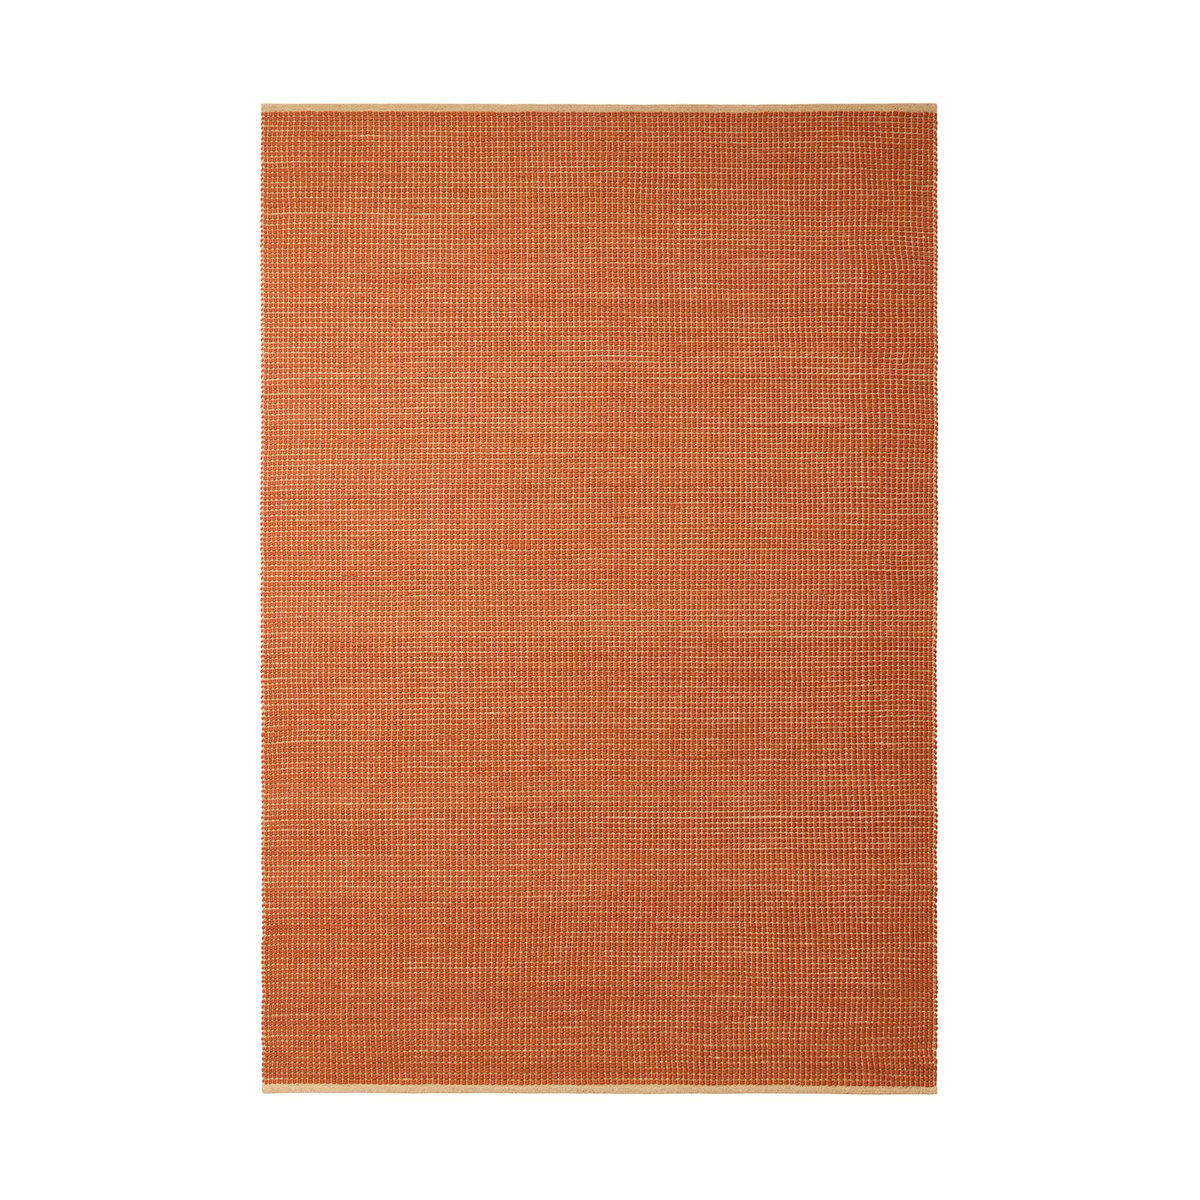 Chhatwal & Jonsson Bengal vloerkleed Orange, 200x300 cm